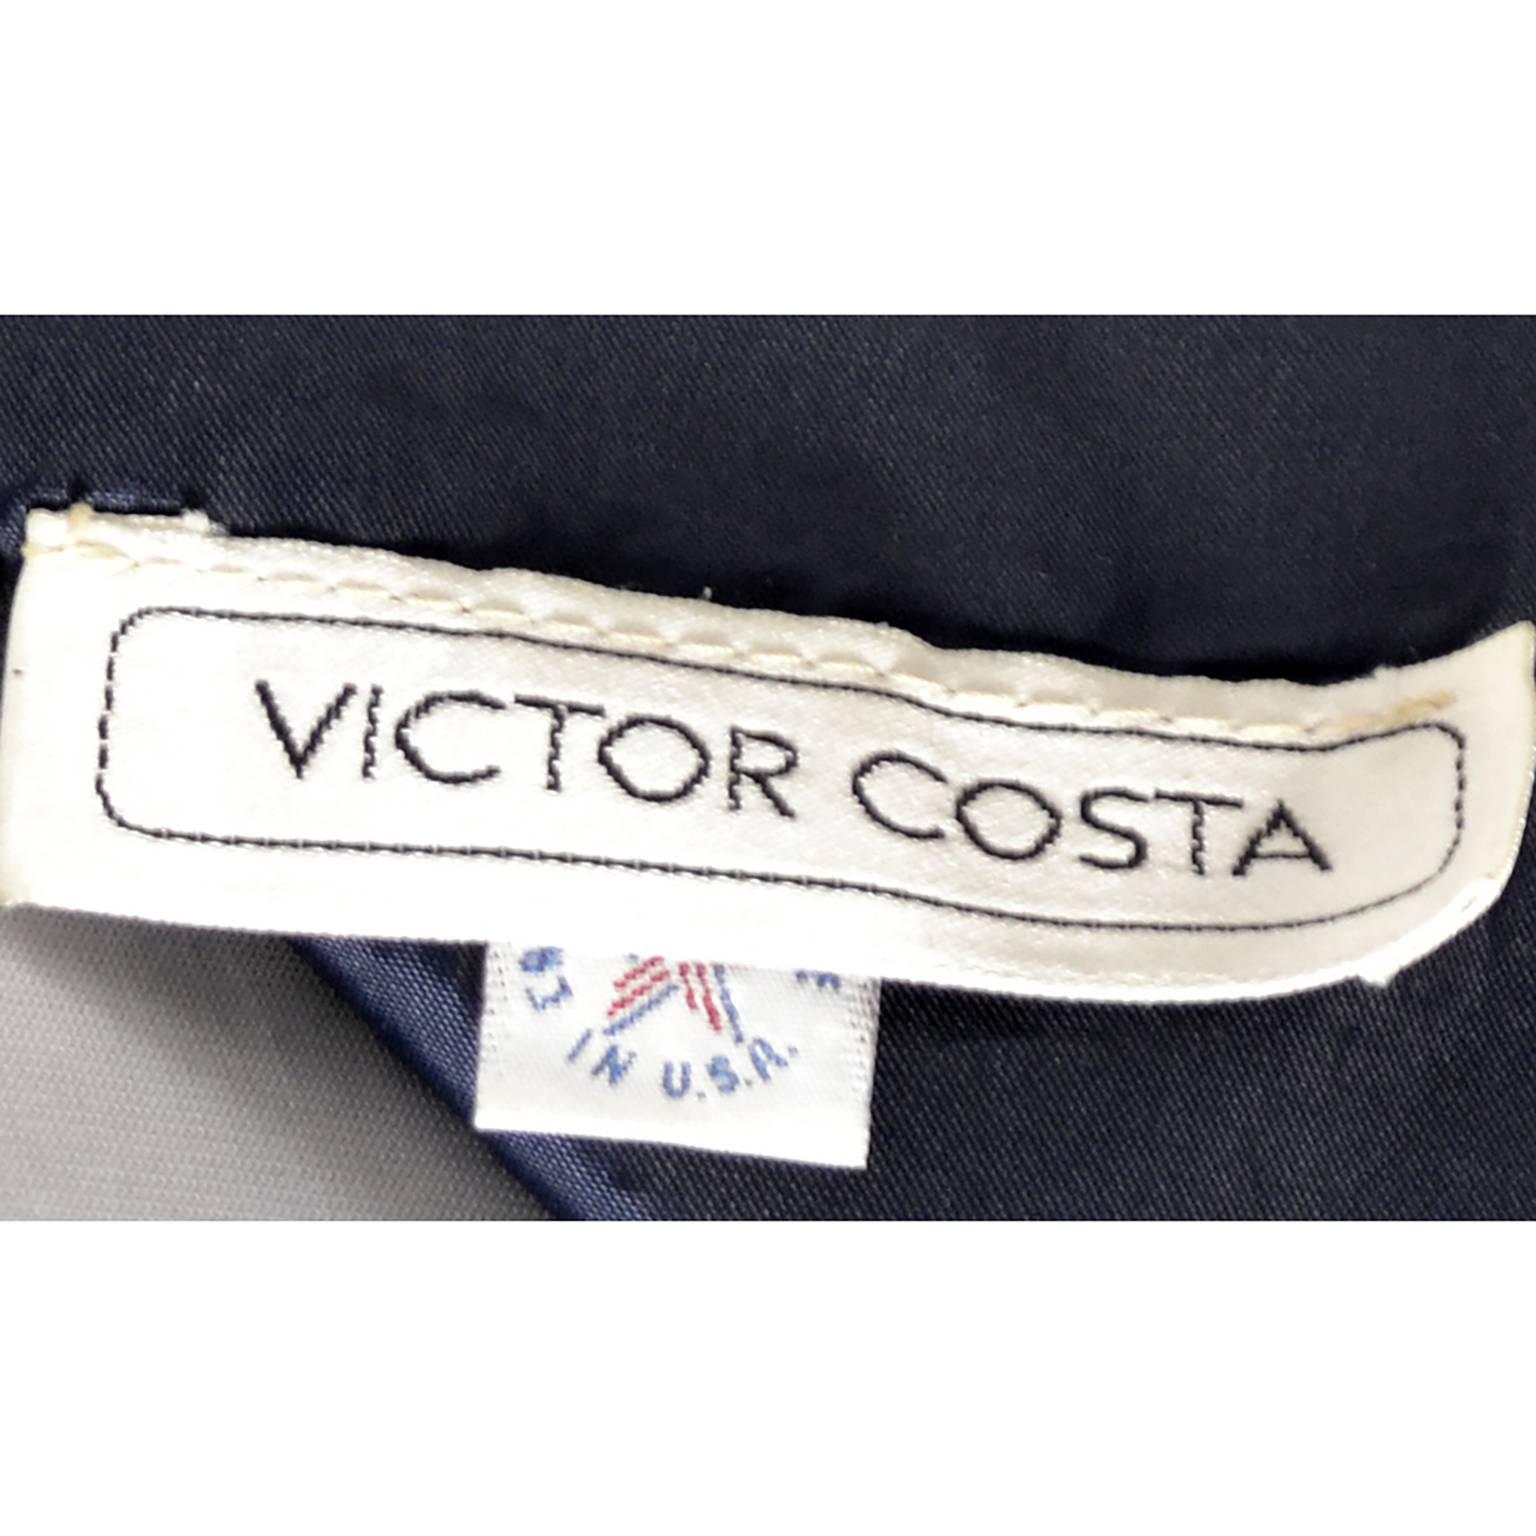 Women's 1980s Strapless Victor Costa Vintage Dress Navy White Polka Dots 2/4